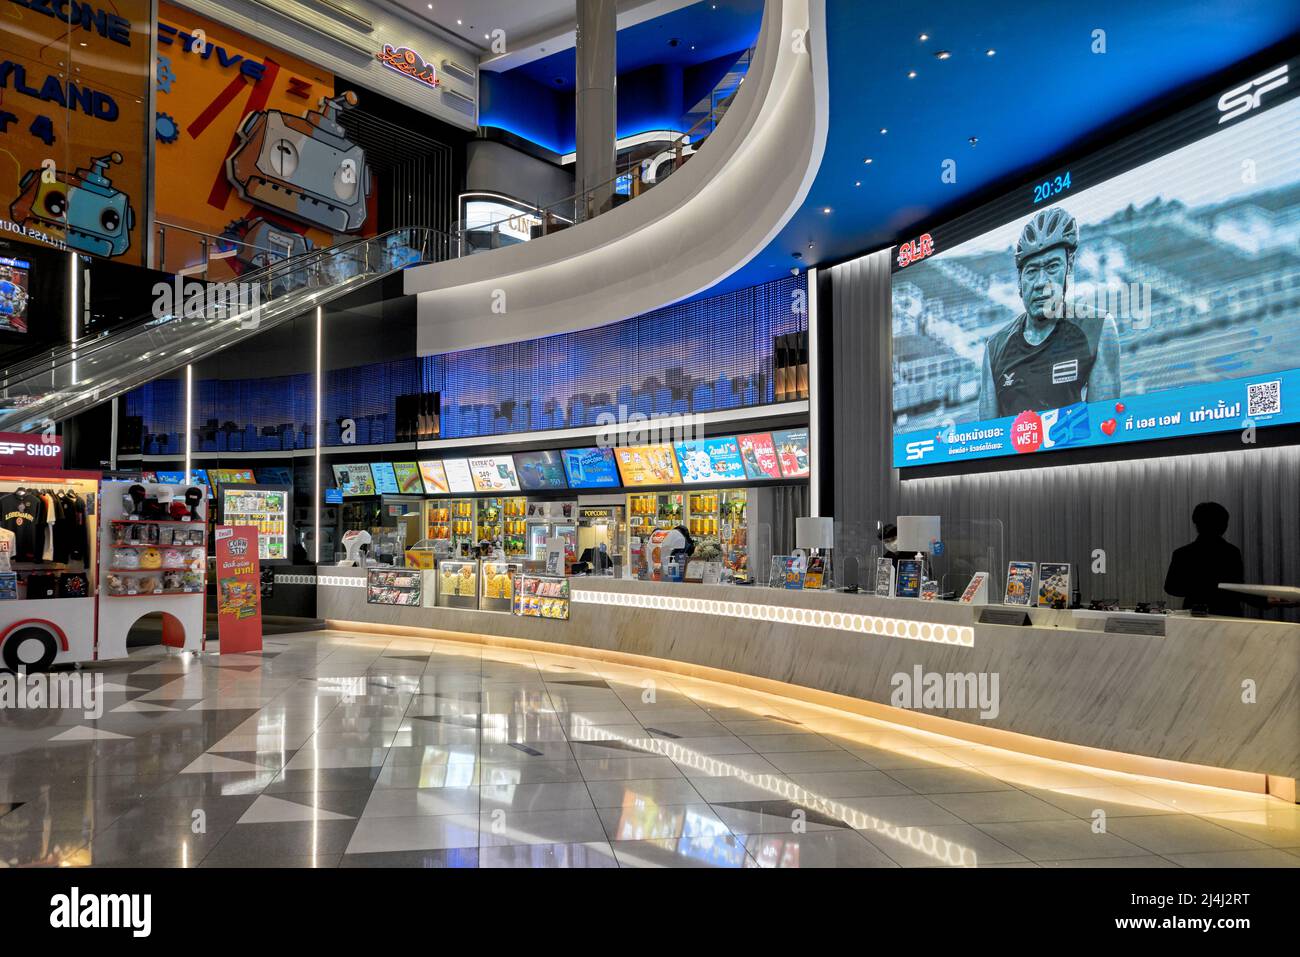 Cinema foyer SFX cinema interior Terminal 21 Pattaya Thailand Stock Photo